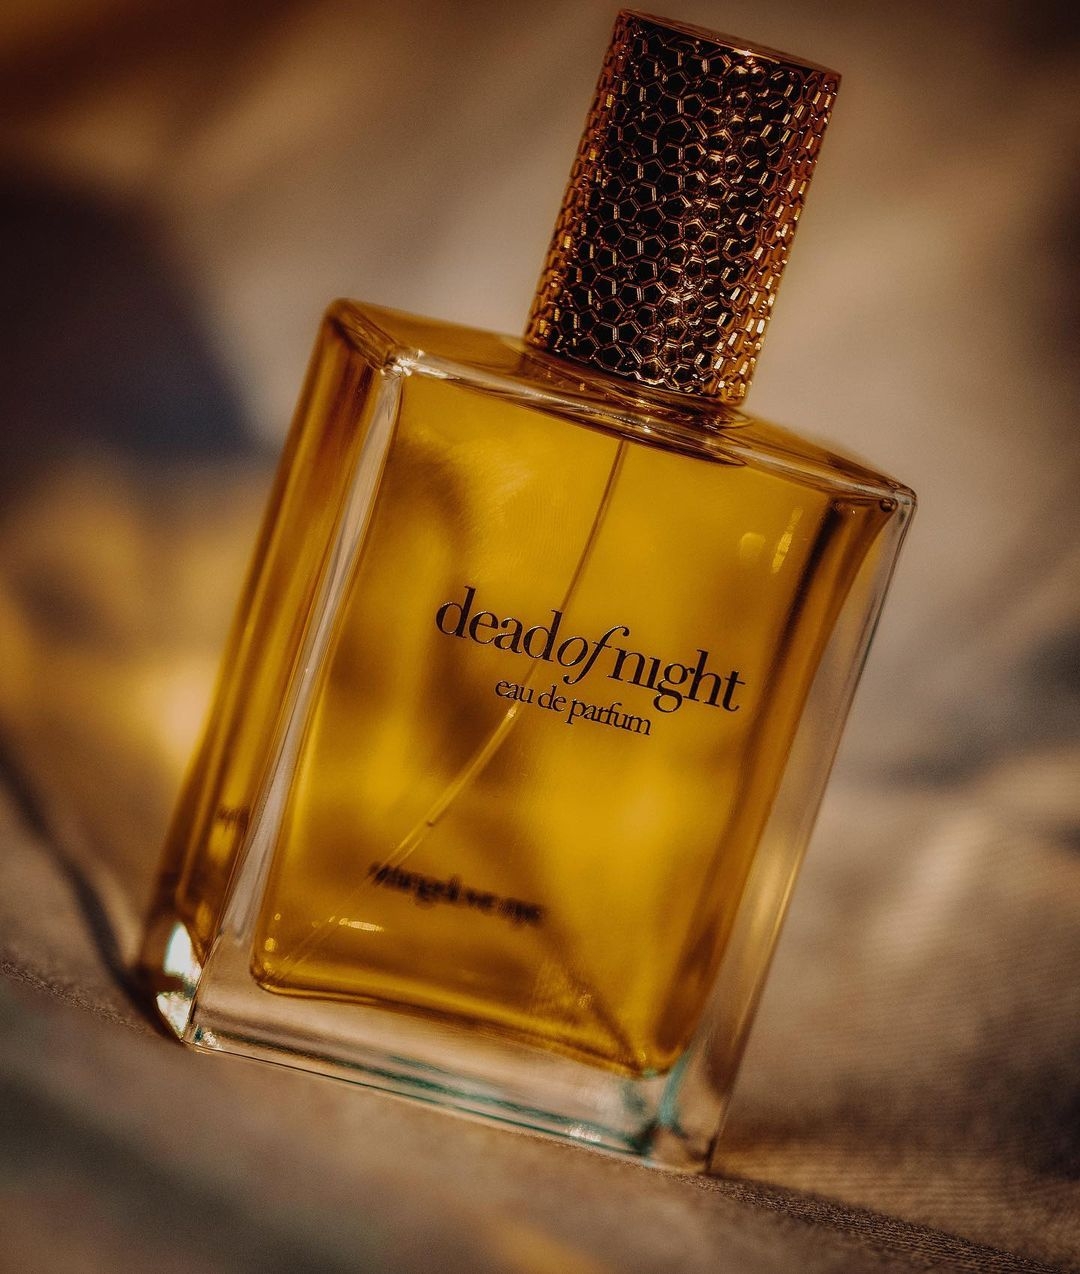 Strangelove ny - deadofnight eau de parfum ambiance | Perfume Lounge